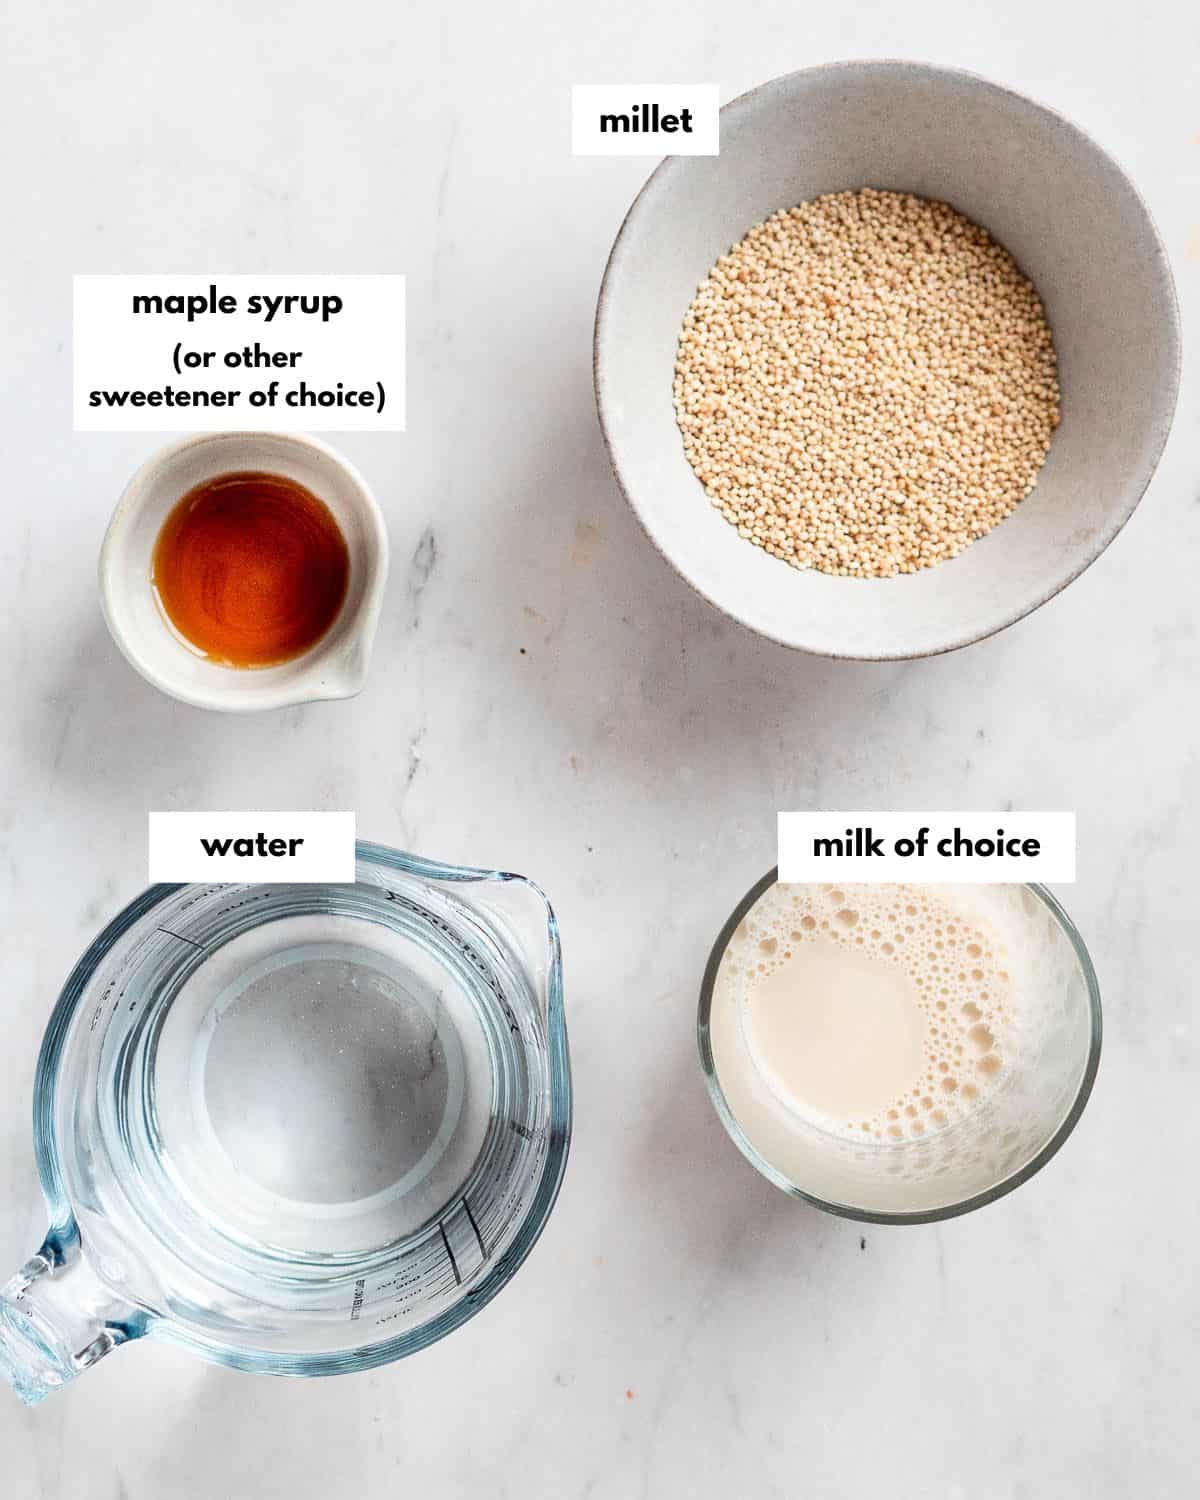 all ingredients needed to make millet porridge.